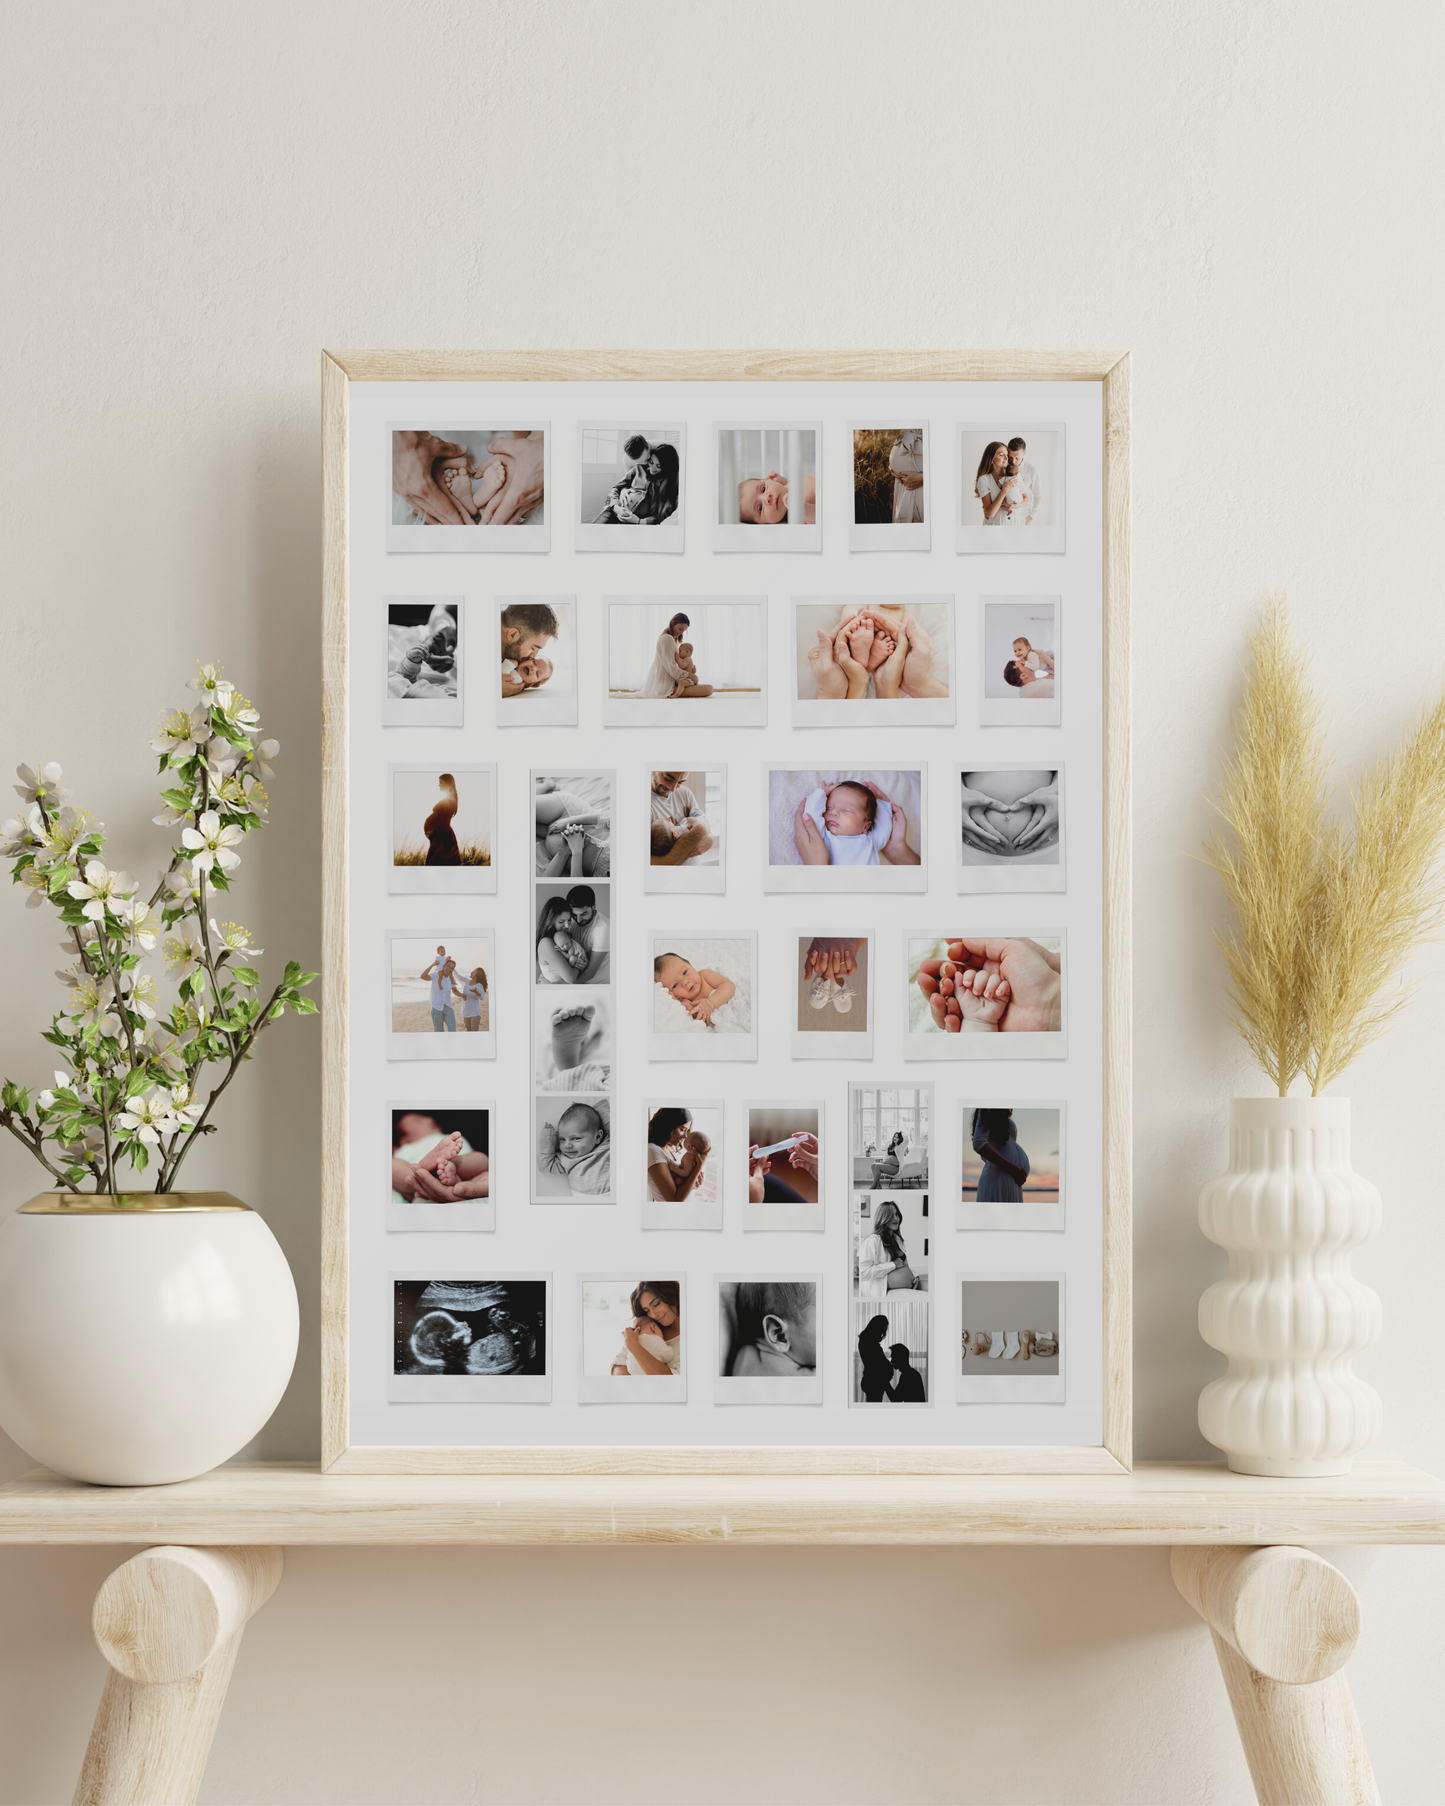 Custom Print - Polaroid Photo Collage